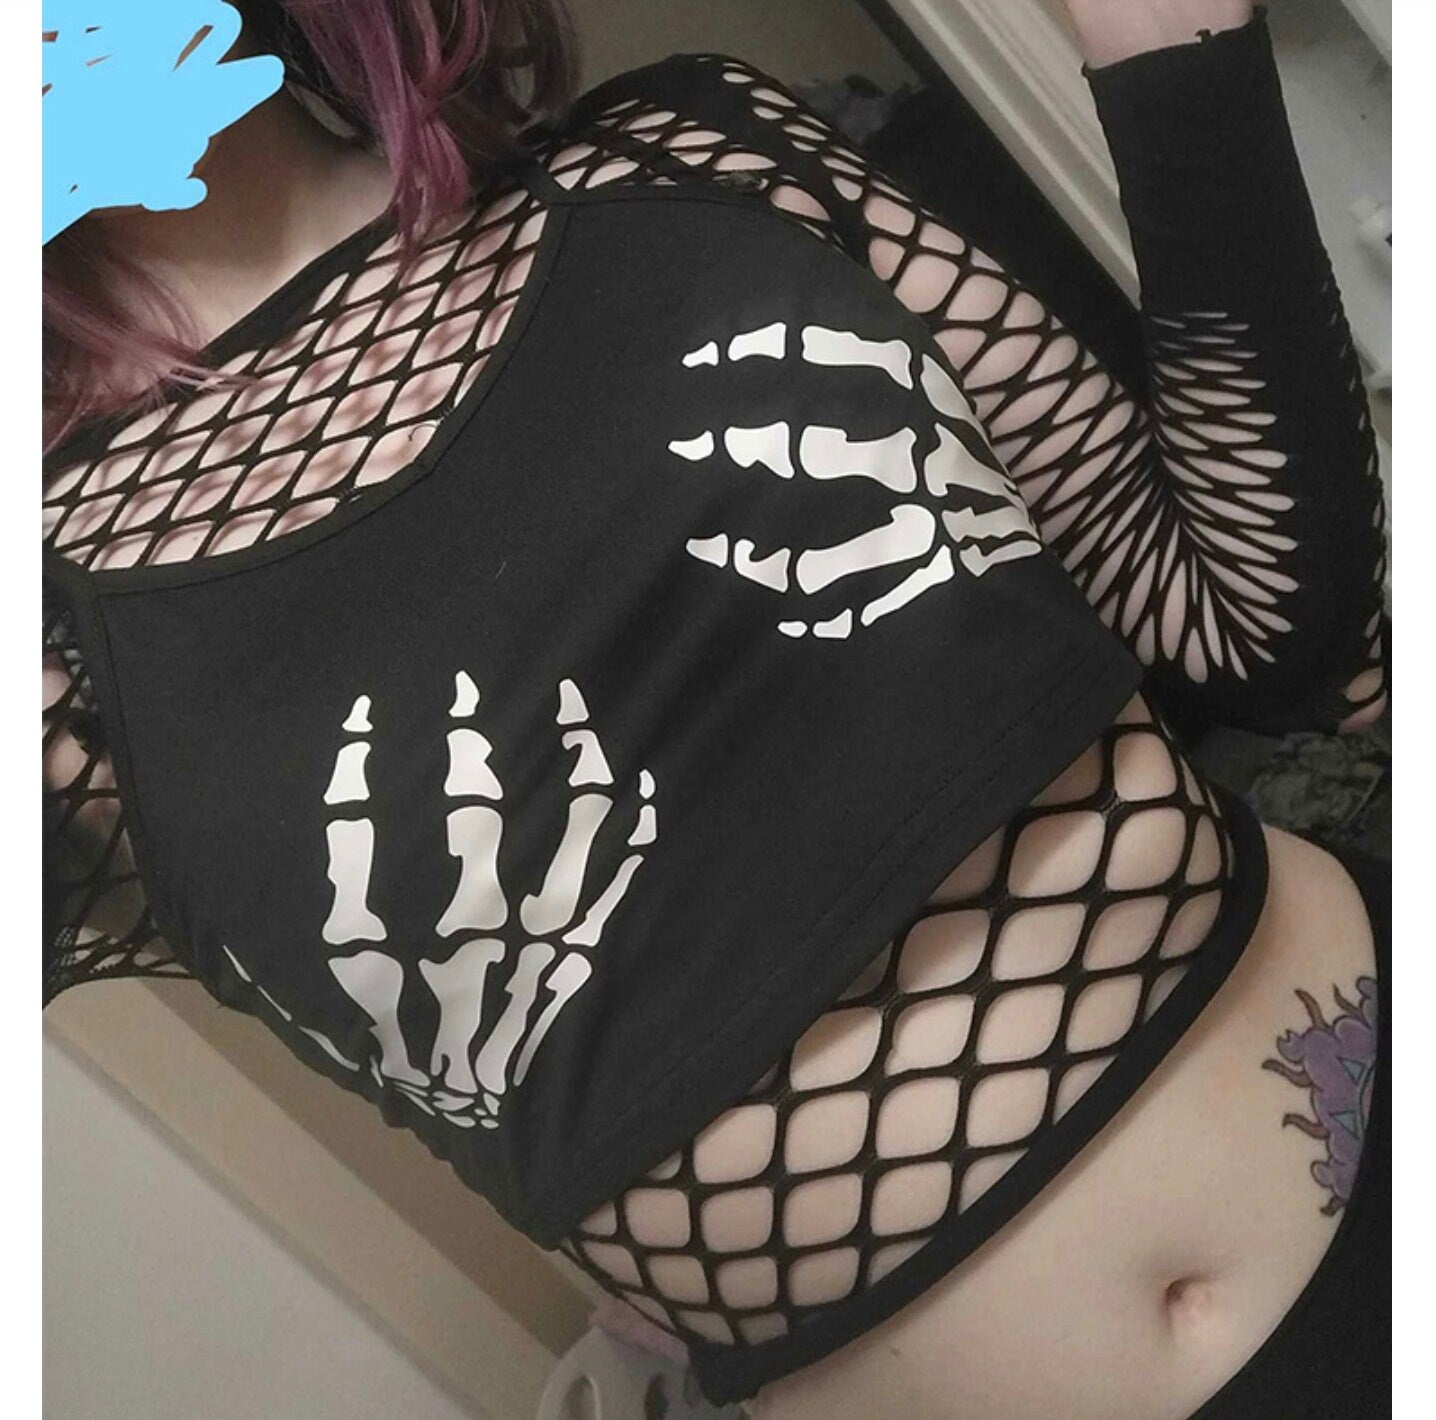 Gothic Black Skeleton Hand Print Cami Crop Top Women Summer Y2K Clothes Graphic Street Style Spaghetti Strap Tanks Tee Shirt  # 244